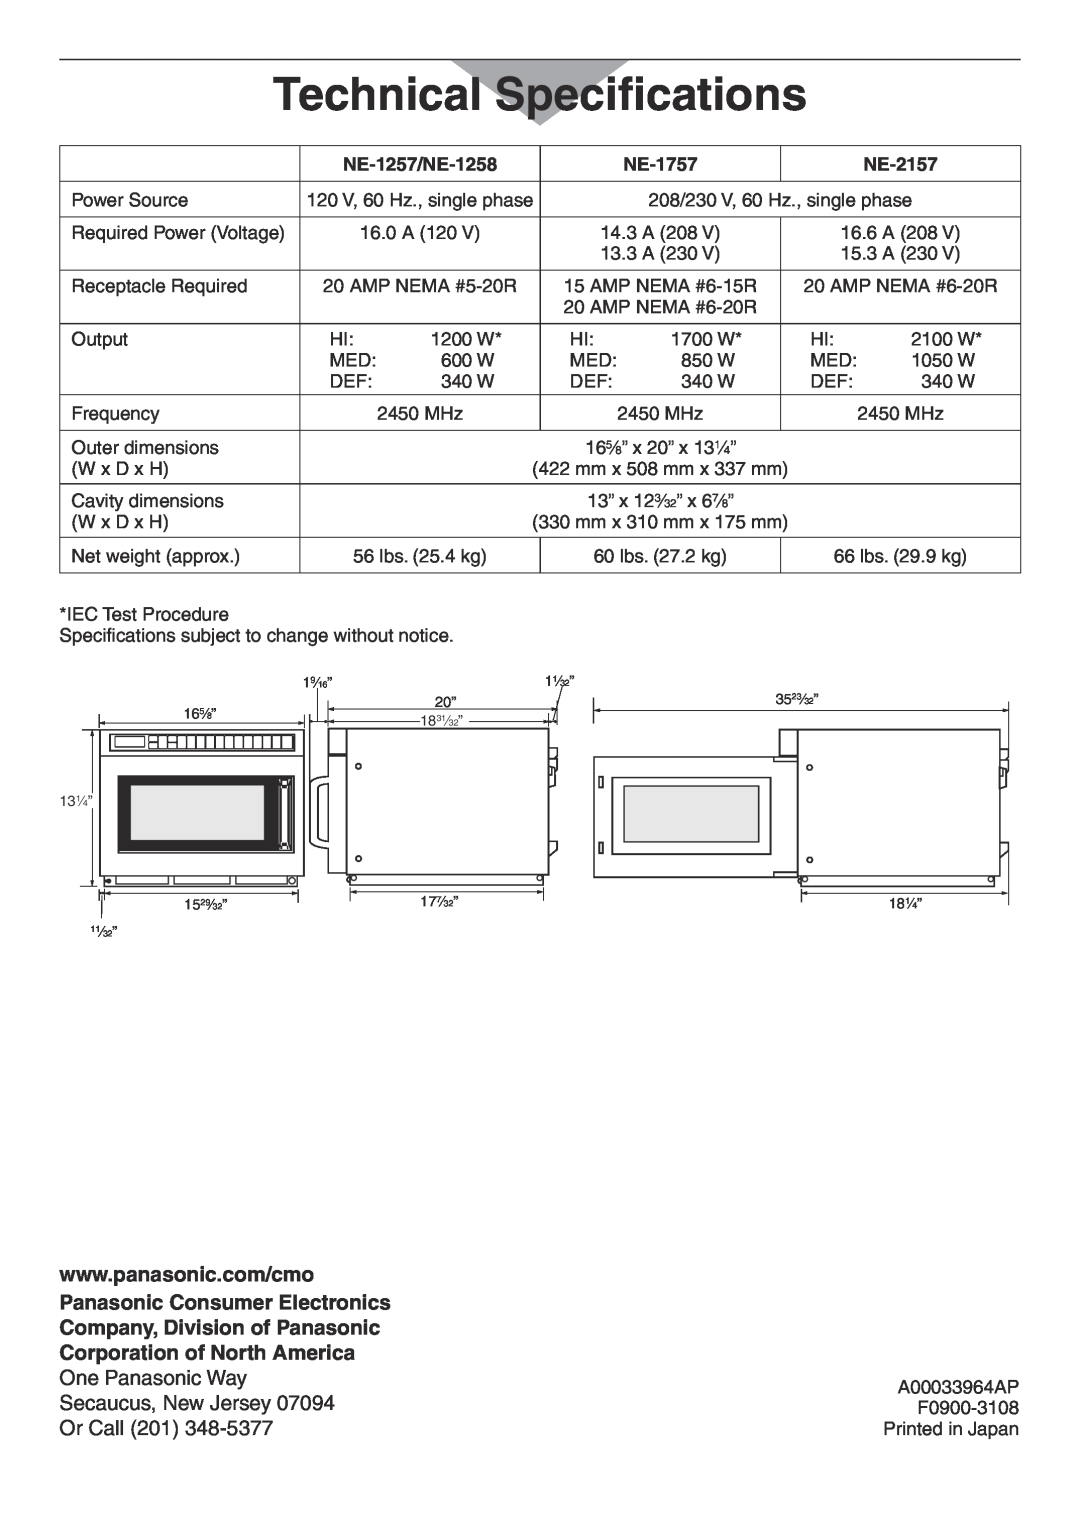 Panasonic NE-2157R manual Technical Specifications, Panasonic Consumer Electronics, Company, Division of Panasonic, Or Call 